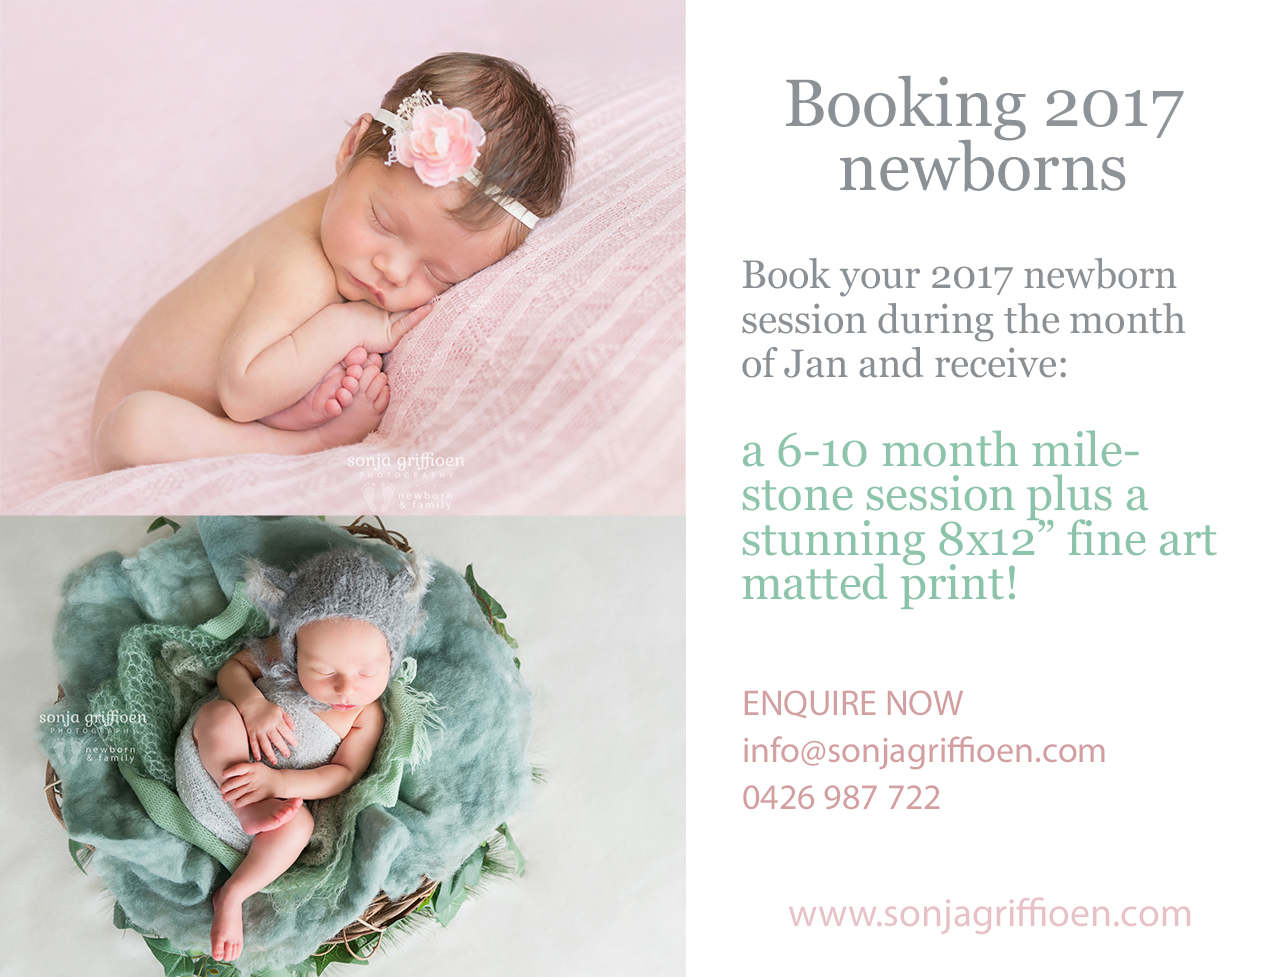 Booking 2017 Newborn Sessions - Free Milestone Session